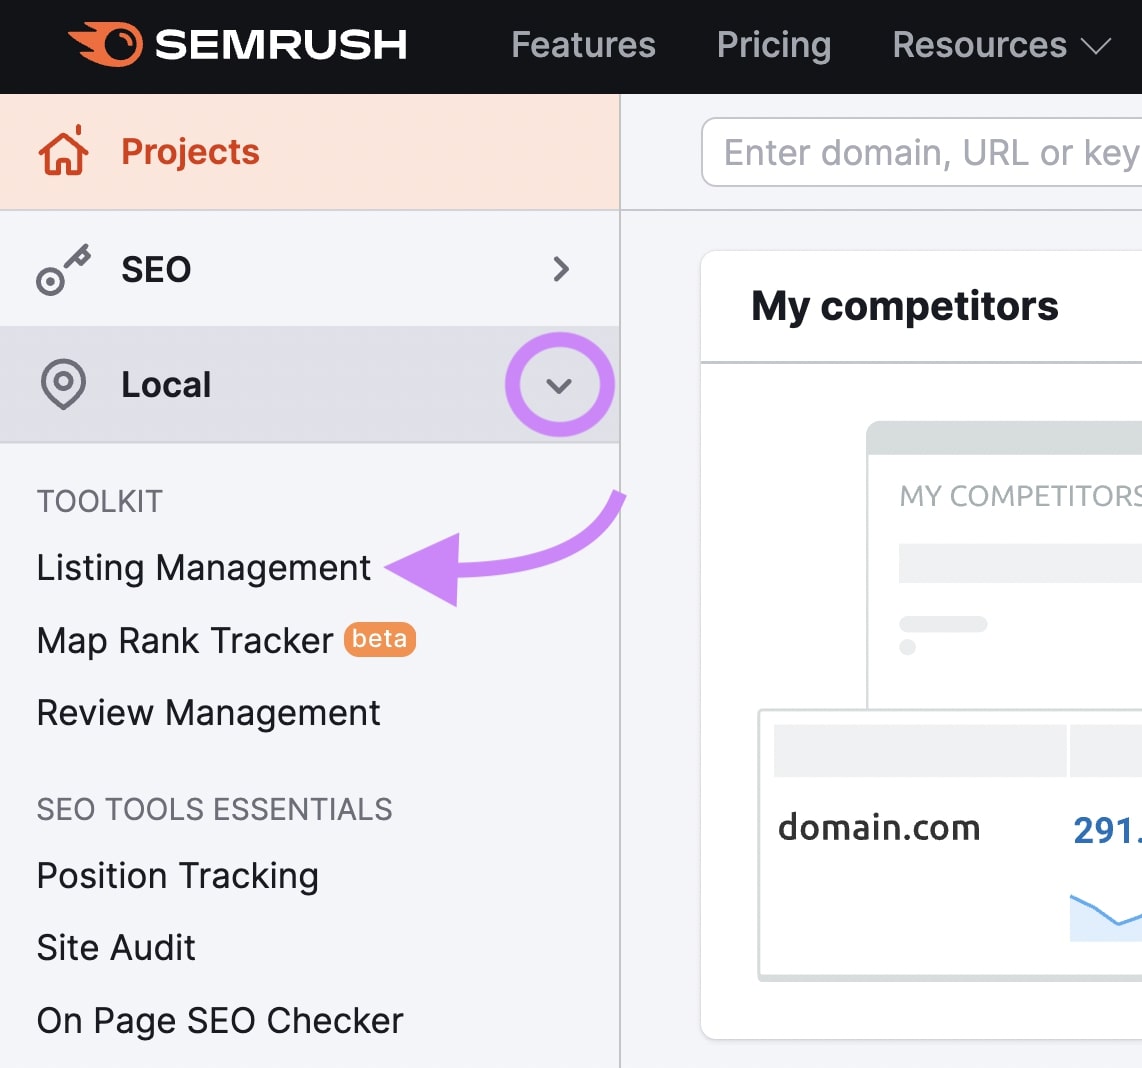 “Listing Management" selected under "Local SEO" from Semrush menu